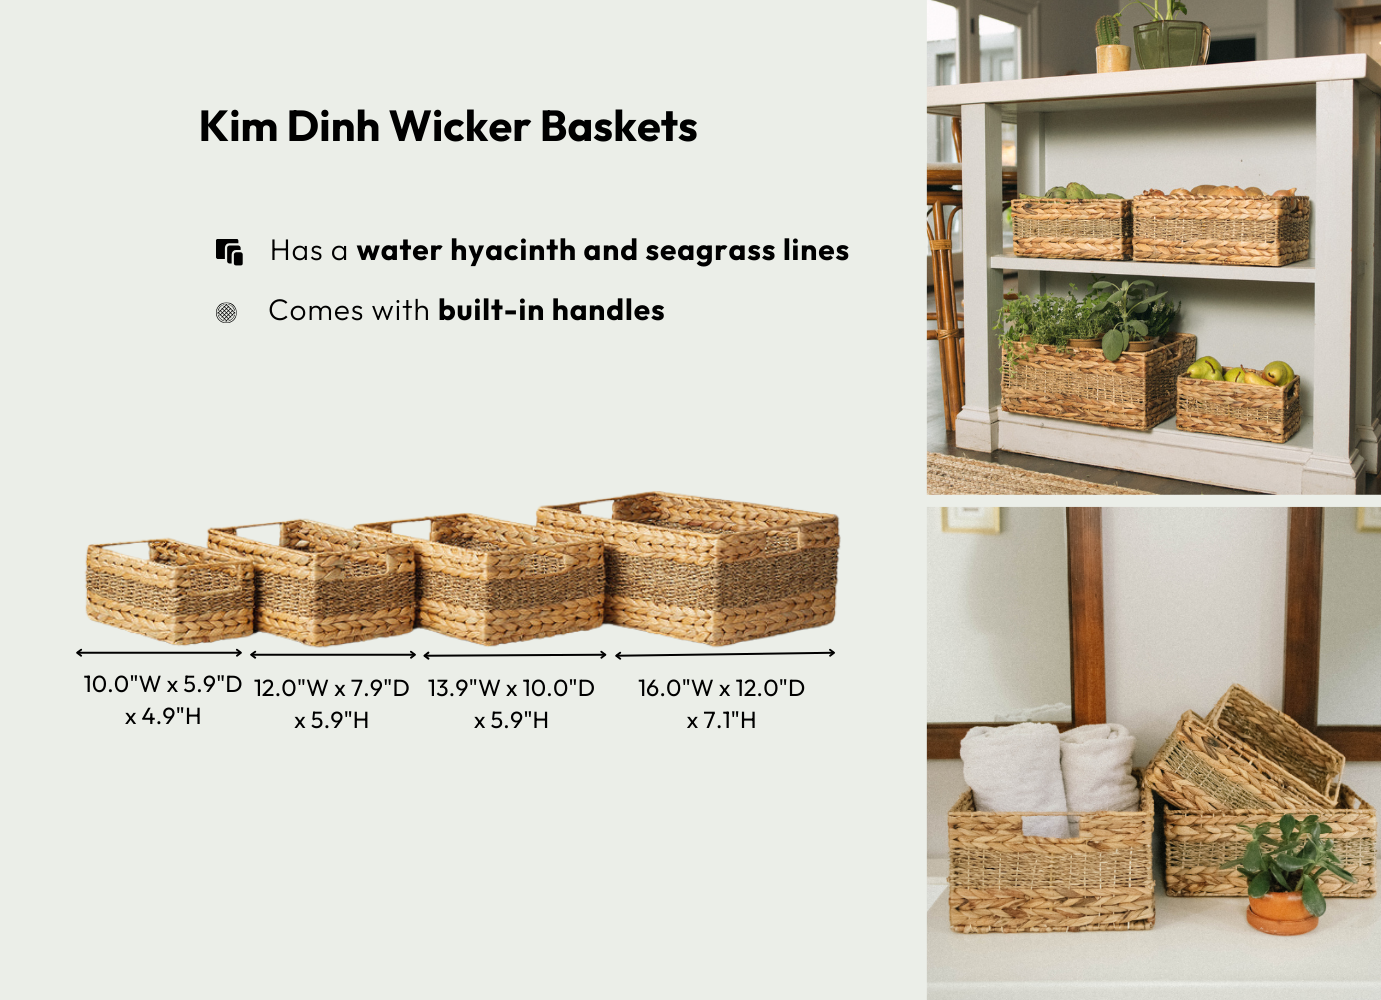 Kim Dinh wicker basket